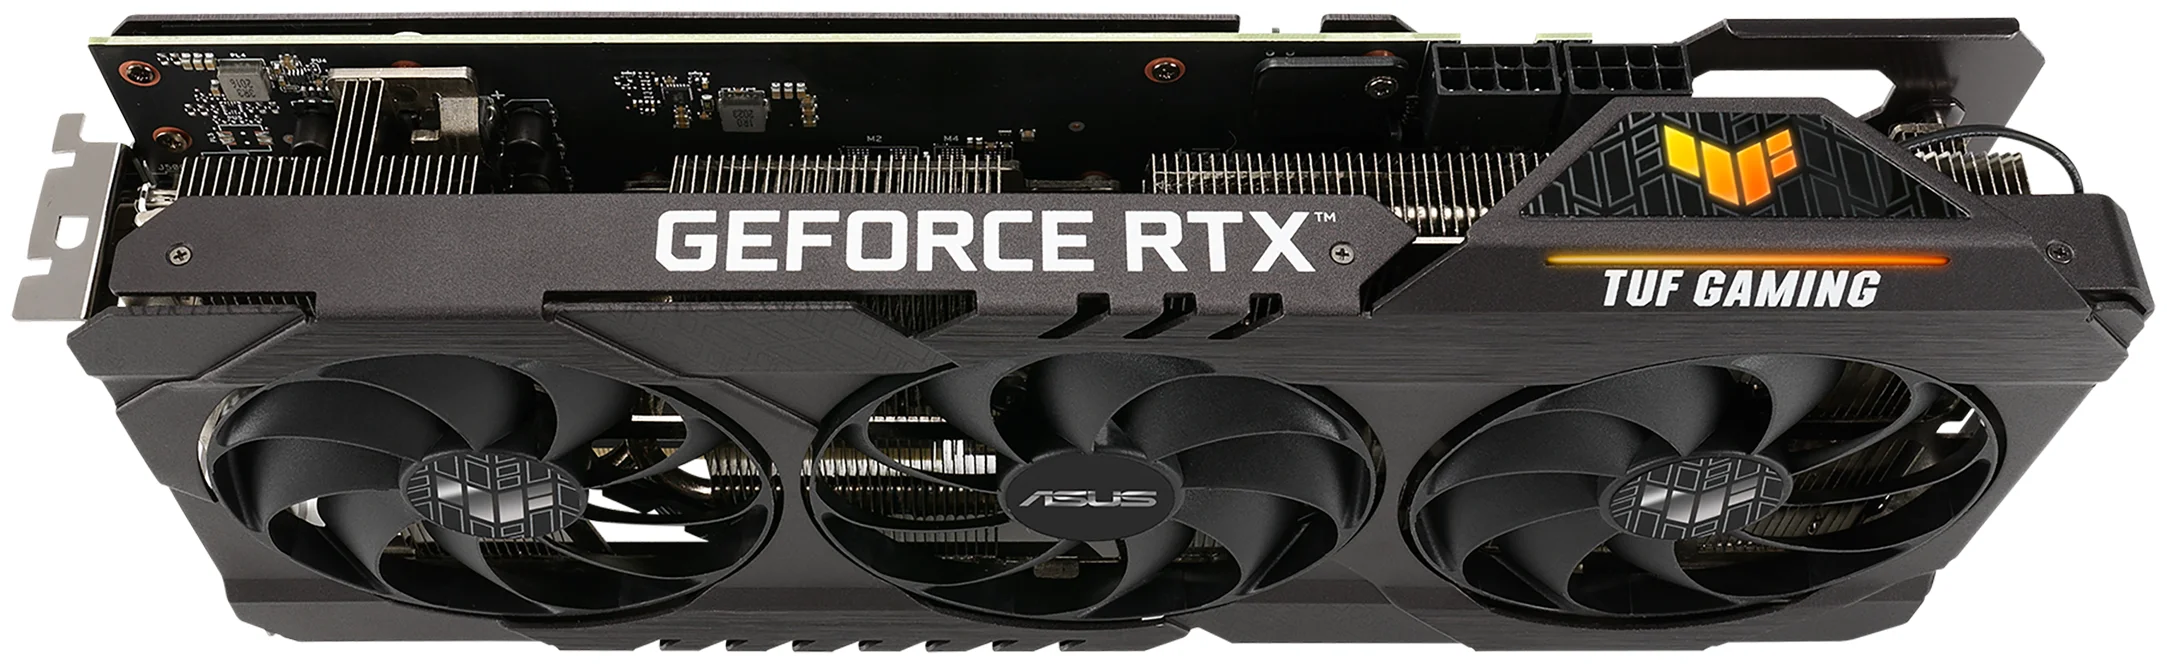 ASUS TUF Gaming GeForce RTX 3070 OC 8GB (TUF-RTX3070-O8G-GAMING) - частота видеопроцессора: 1815 МГц